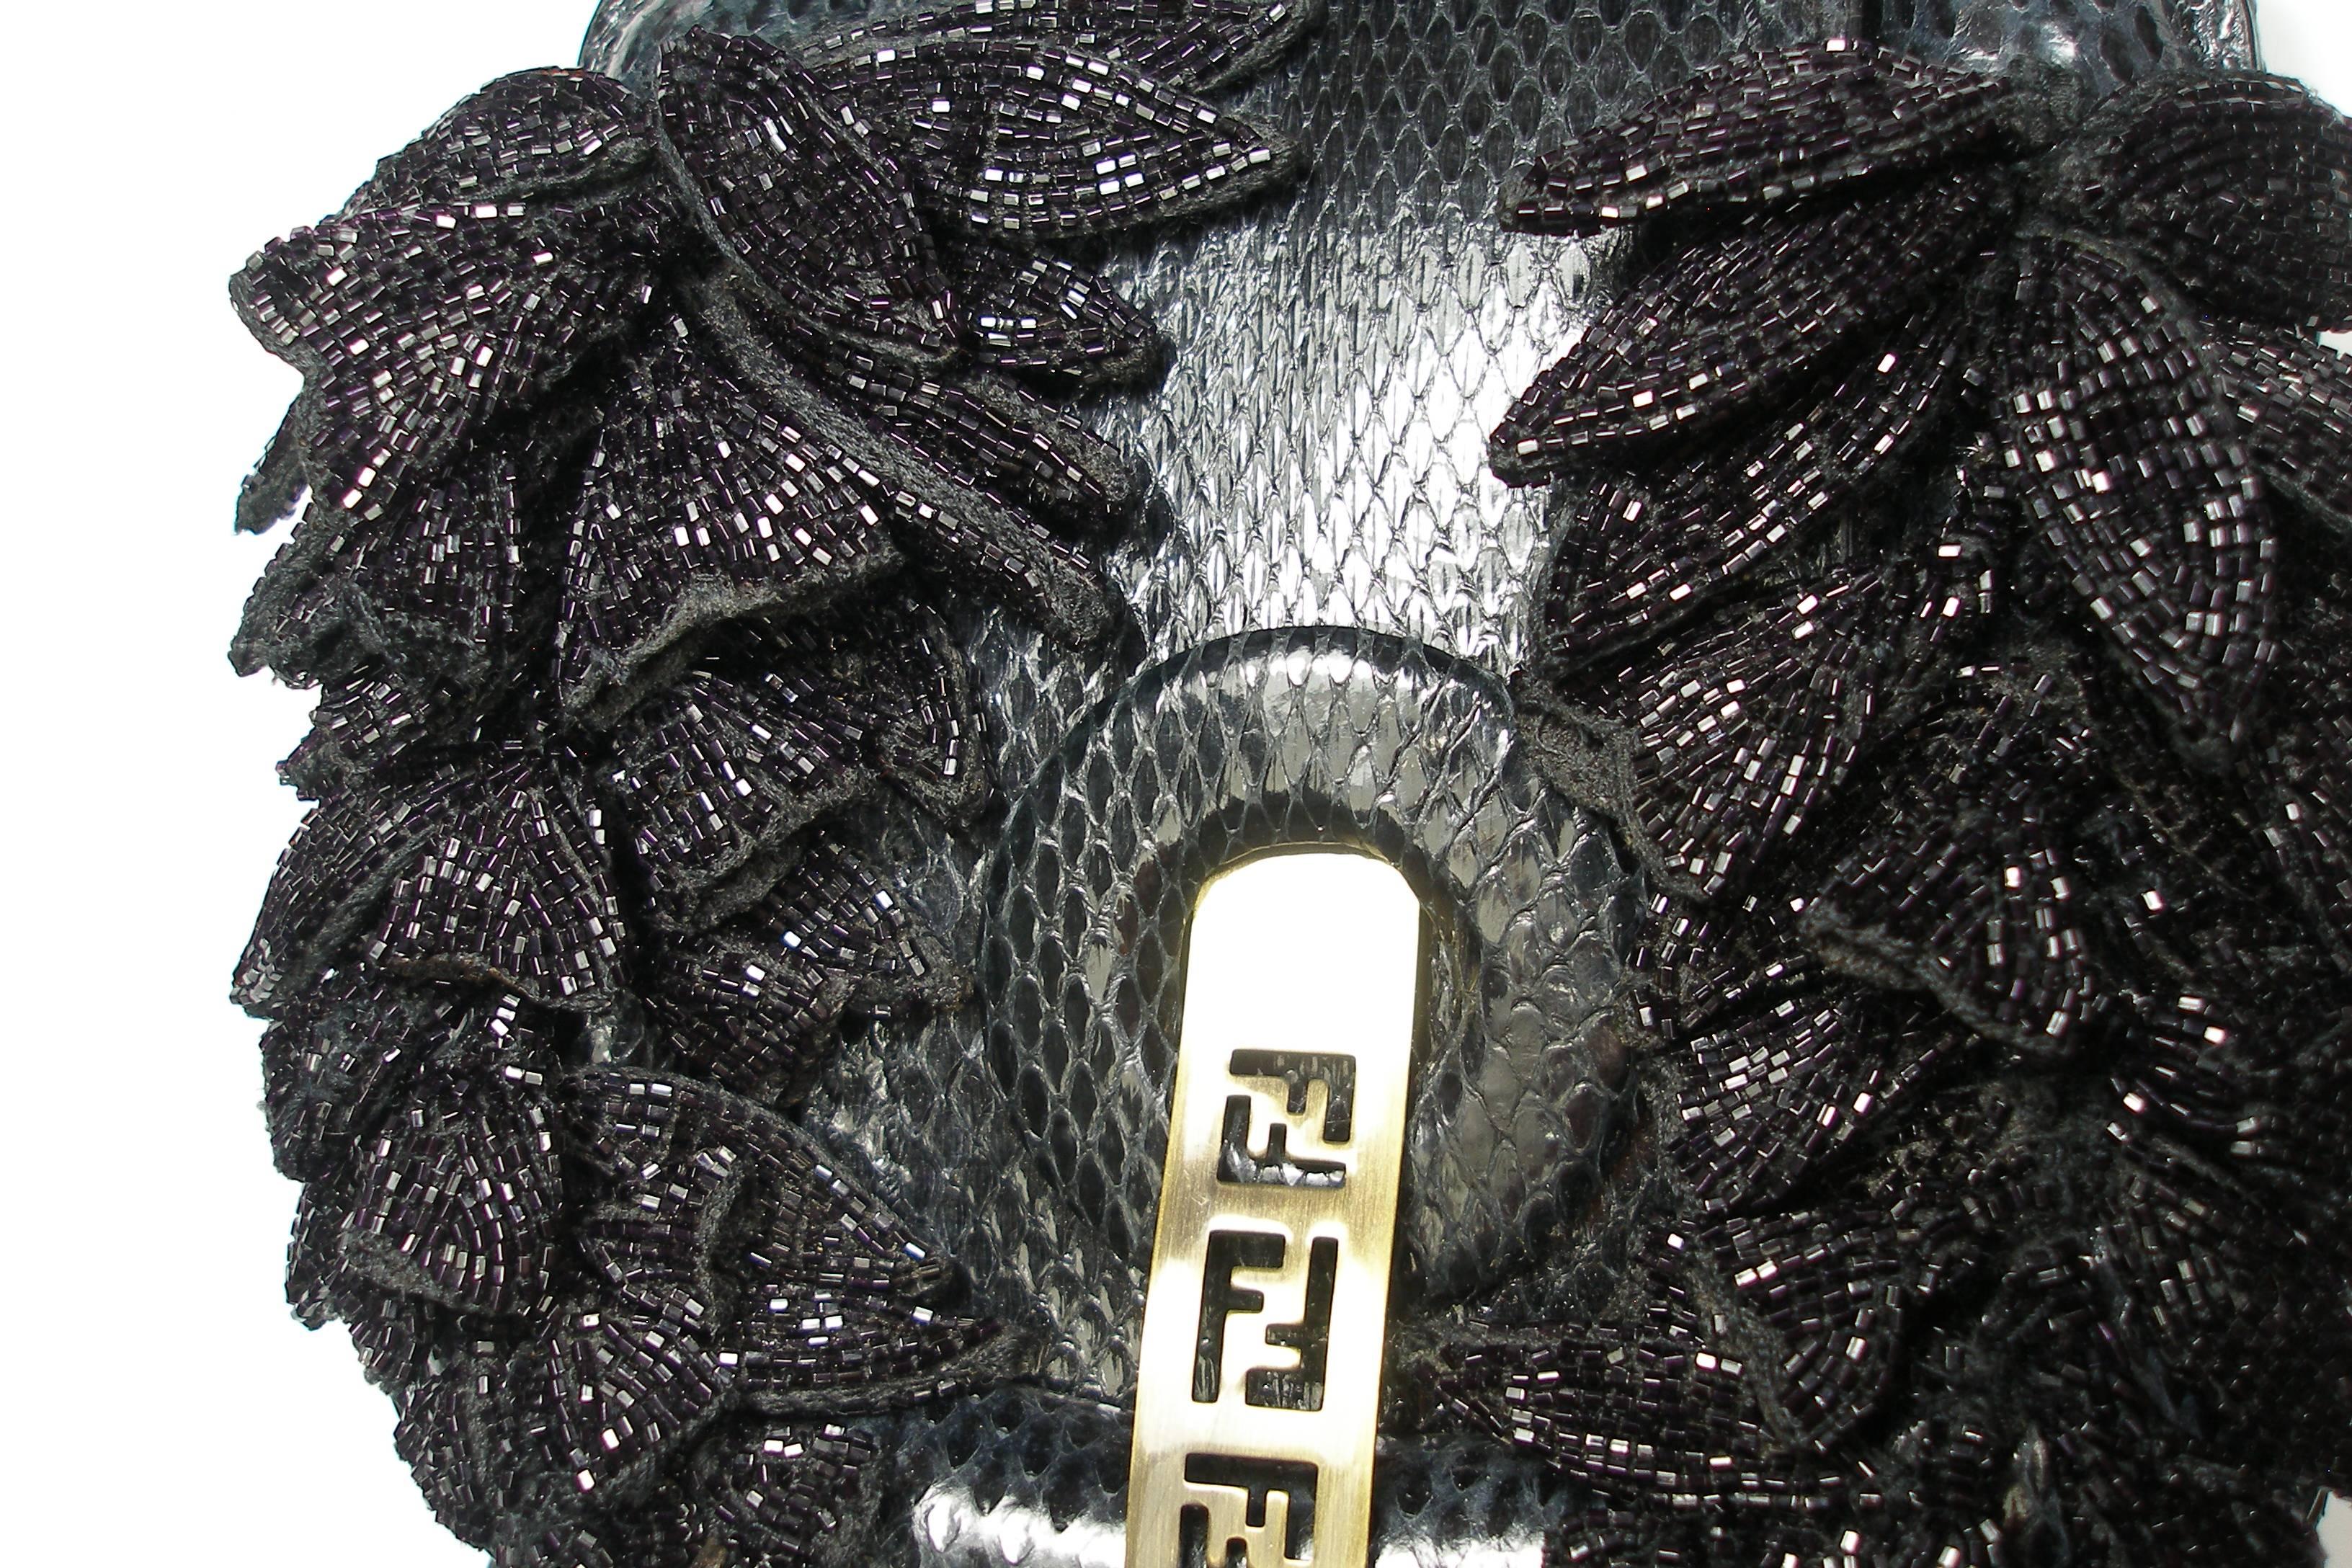 RARE 1990 Limited Edition Fendi Fold Over Chain Lizard Handbag For Sale 2